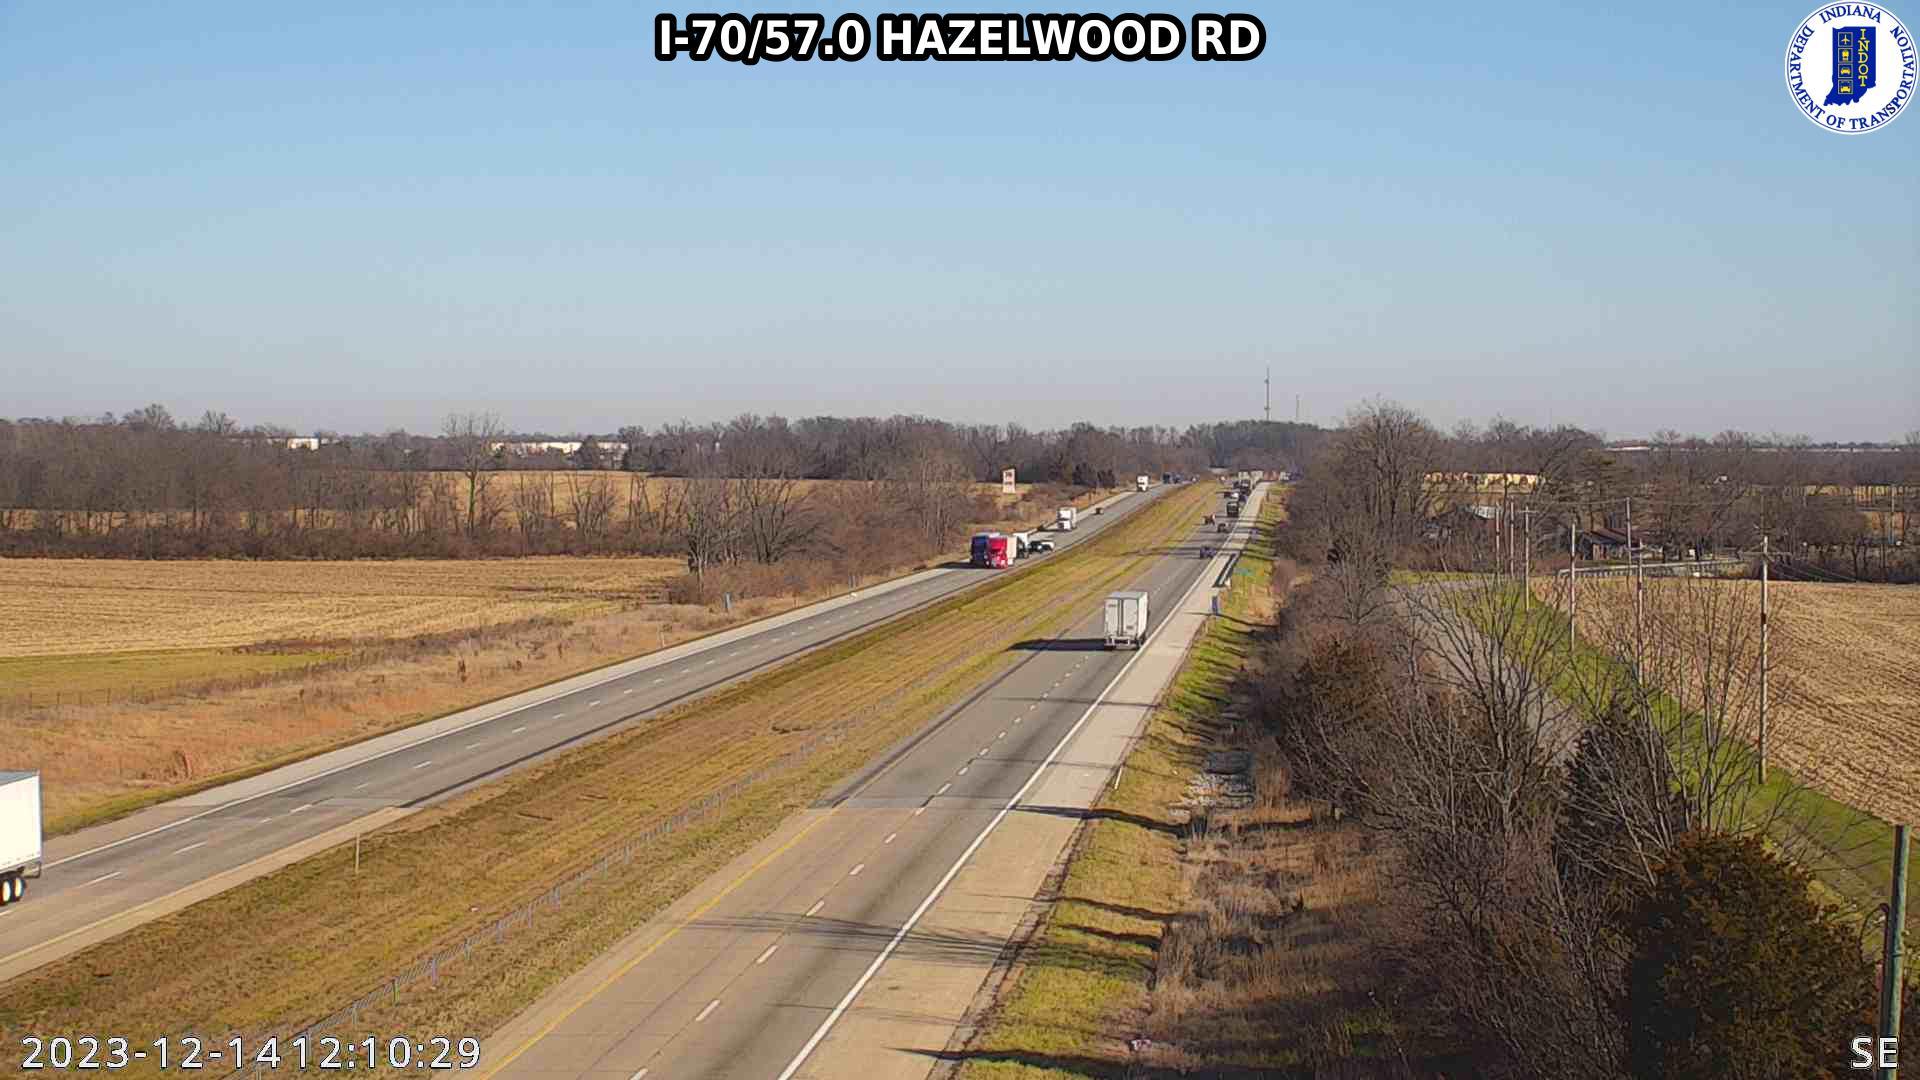 Traffic Cam Hazelwood: I-70: I-70/57.0 - RD